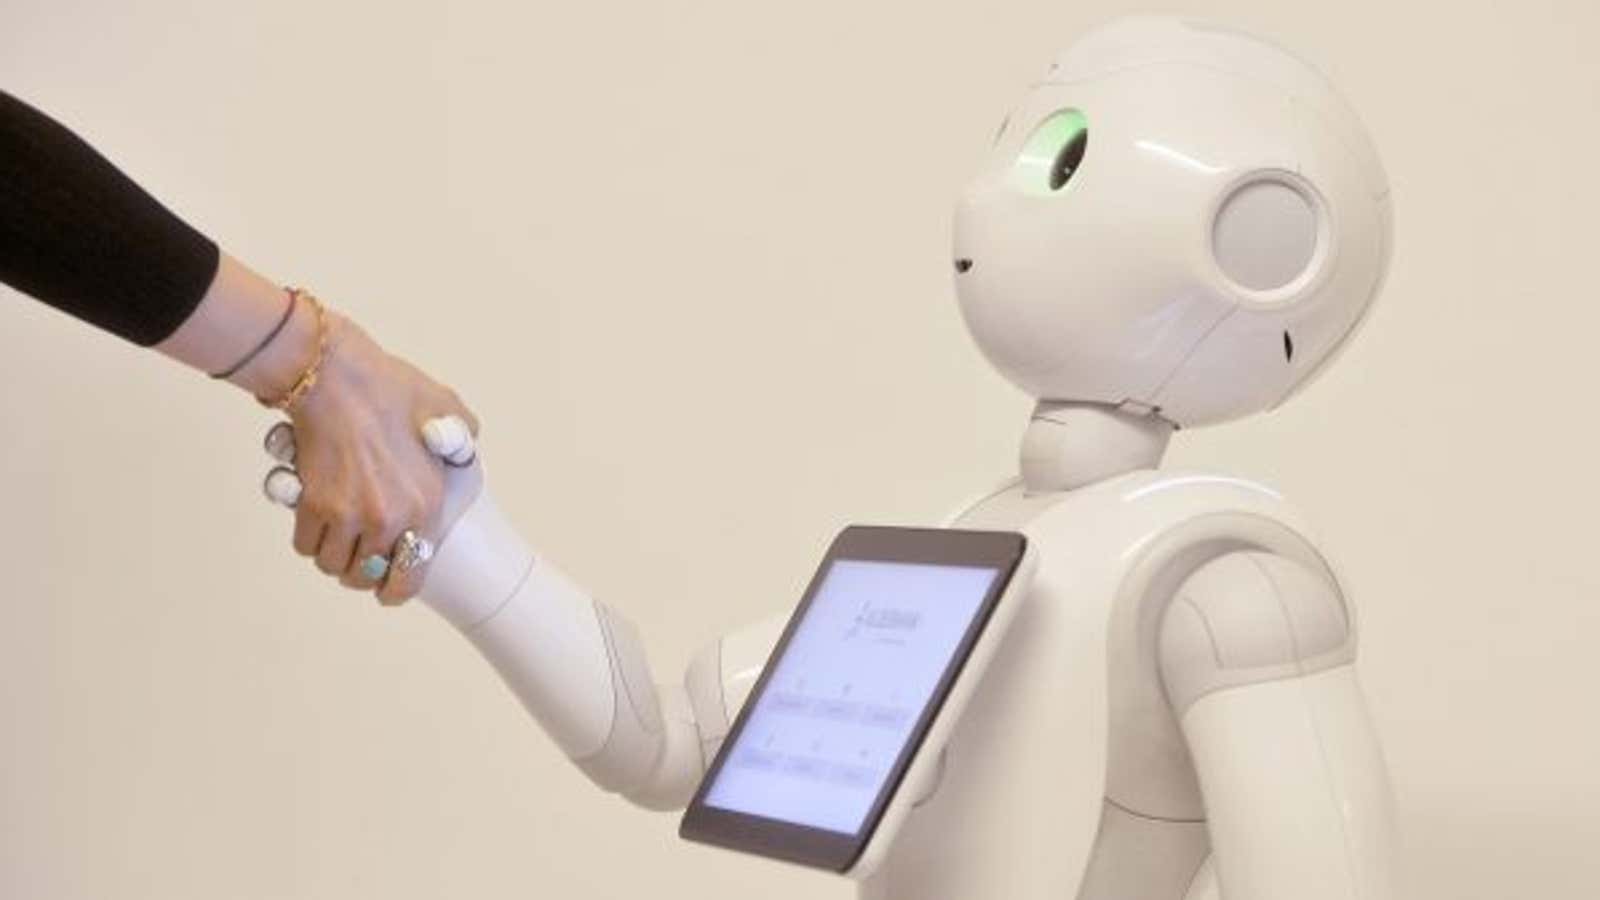 A humanoid robot shakes a human’s hand